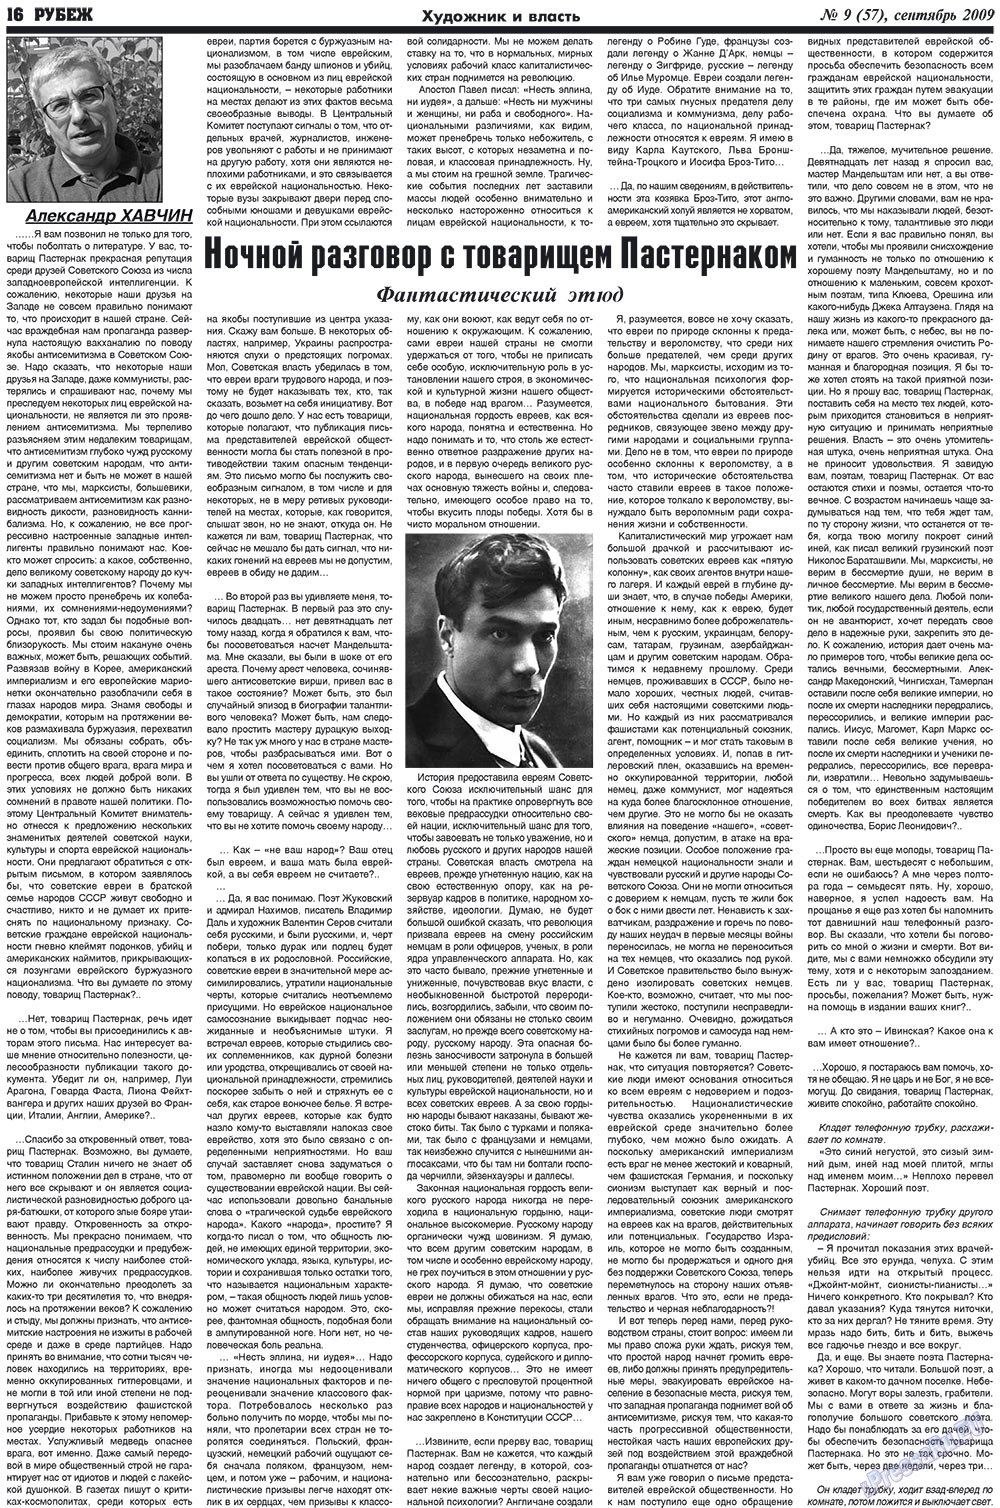 Рубеж, газета. 2009 №9 стр.16